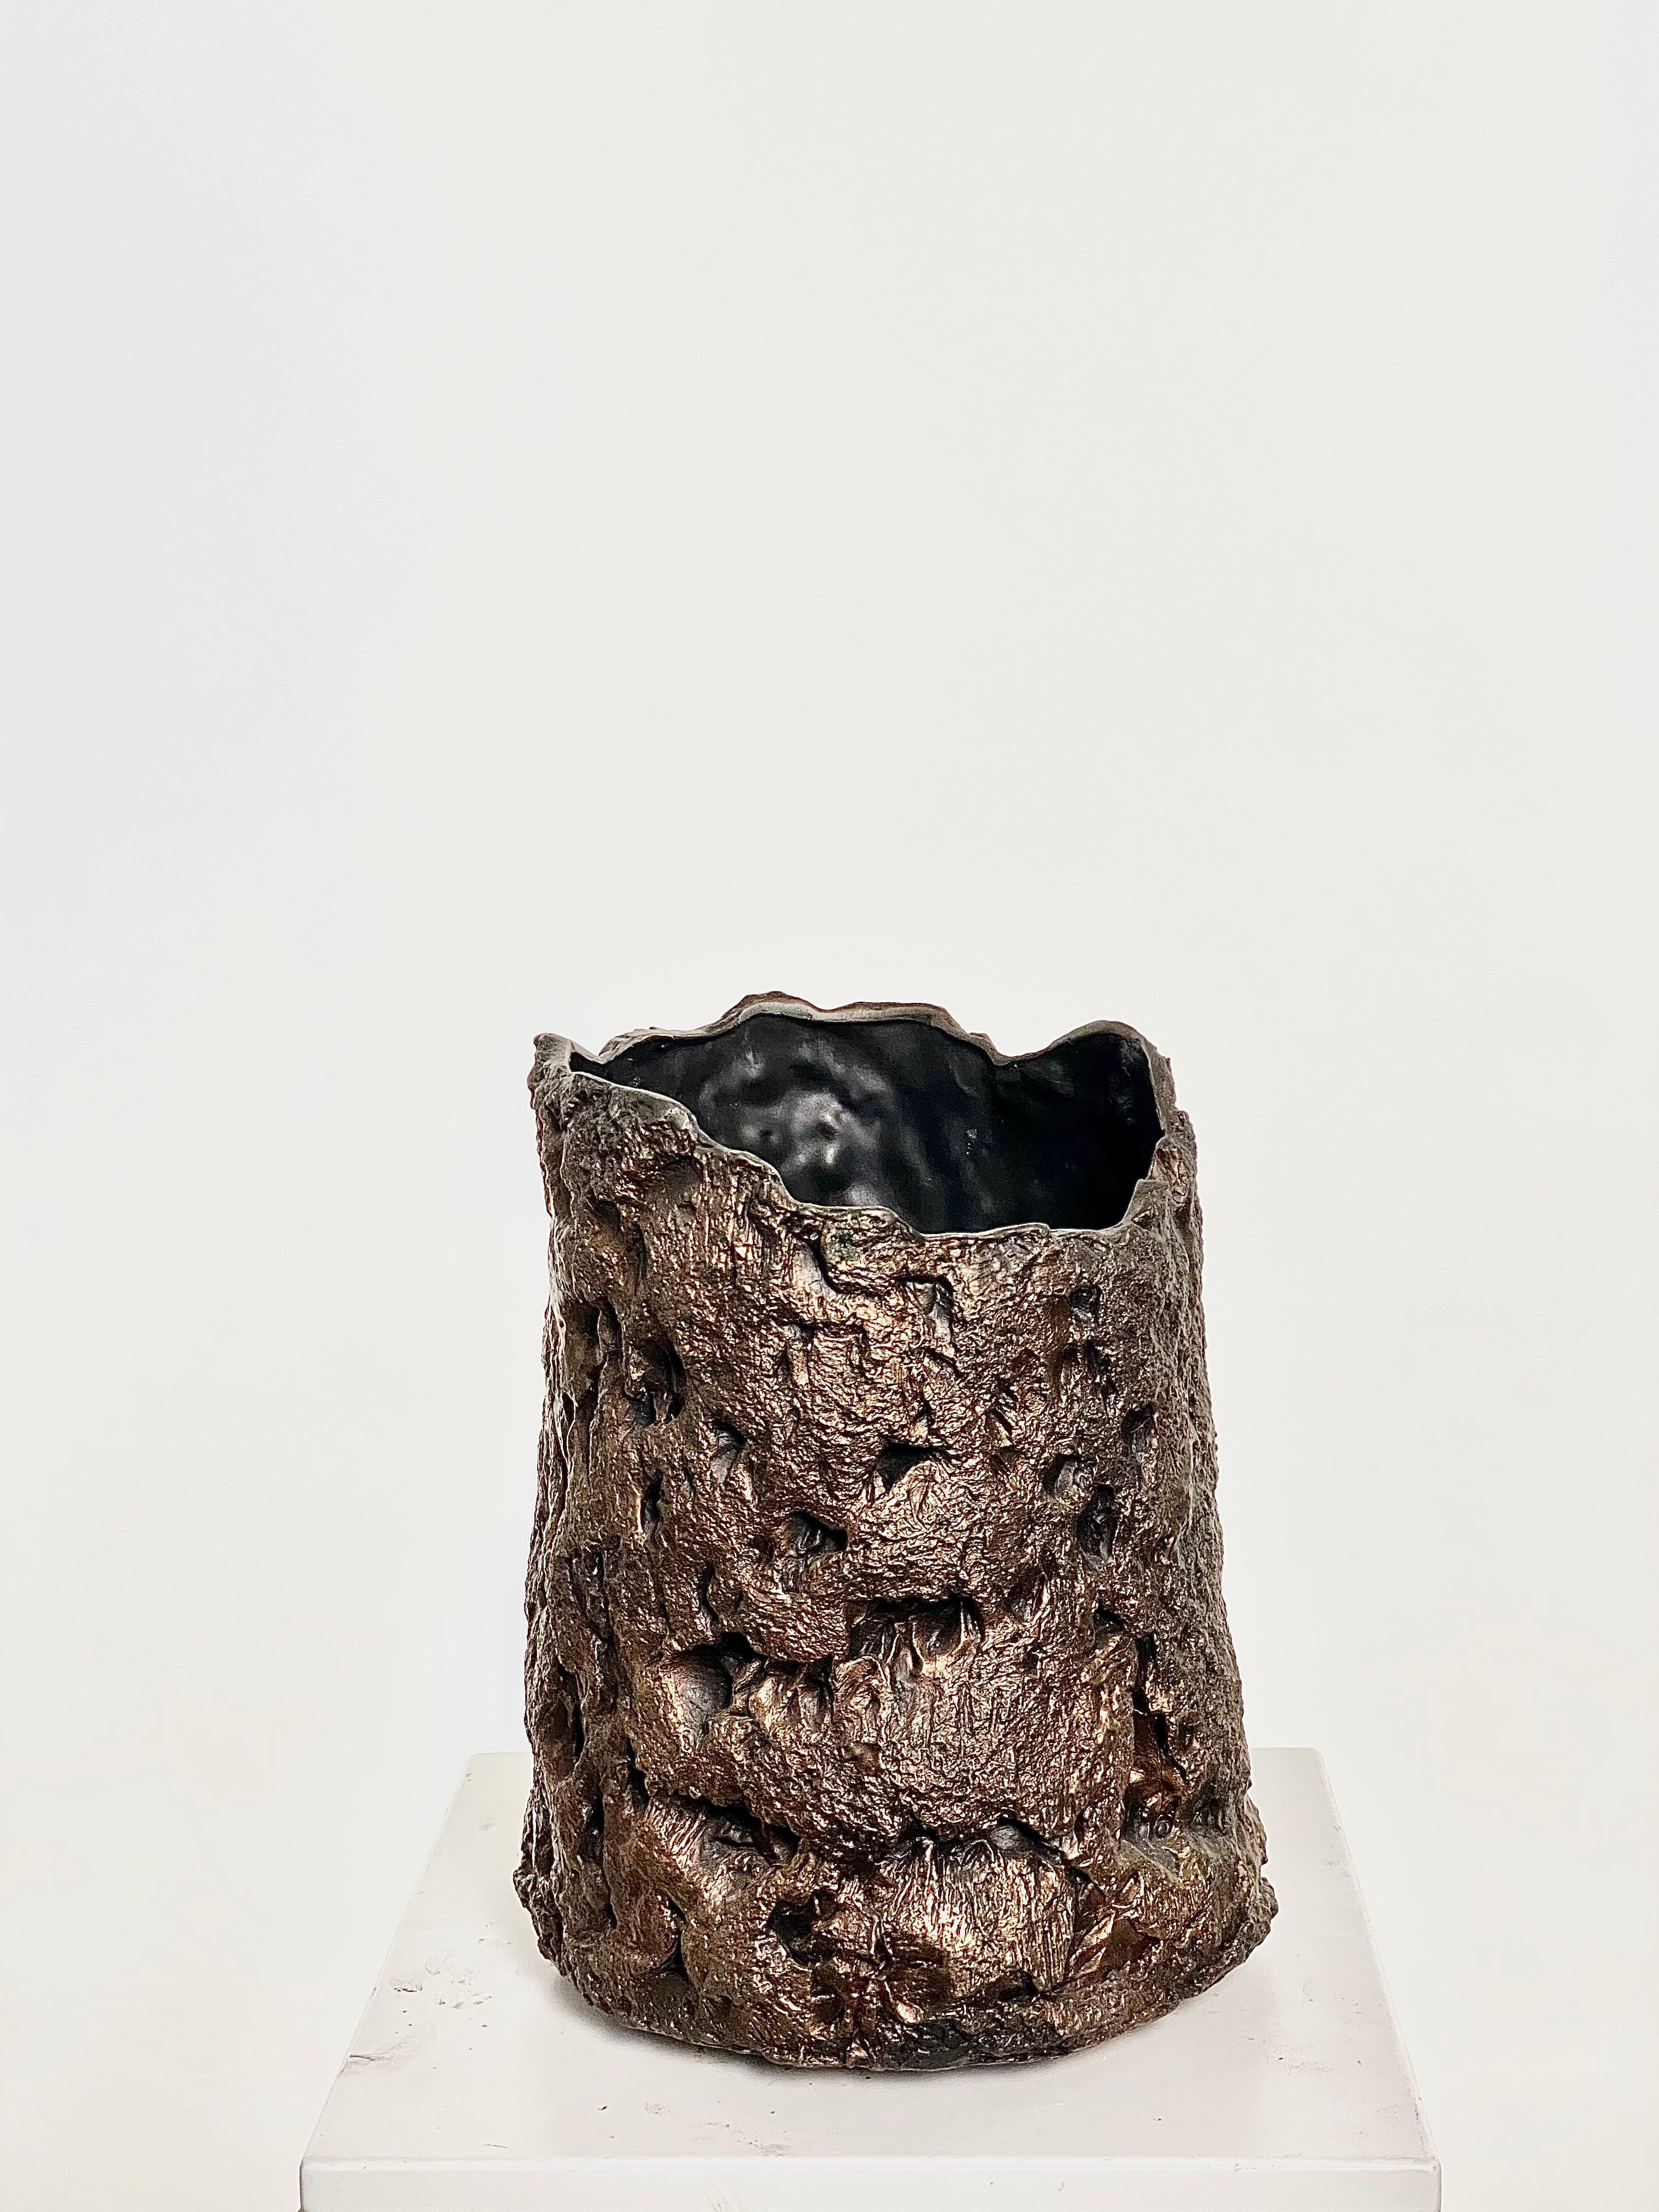 American  Sculptural Bronze Vase, 21st Century by Mattia Biagi For Sale